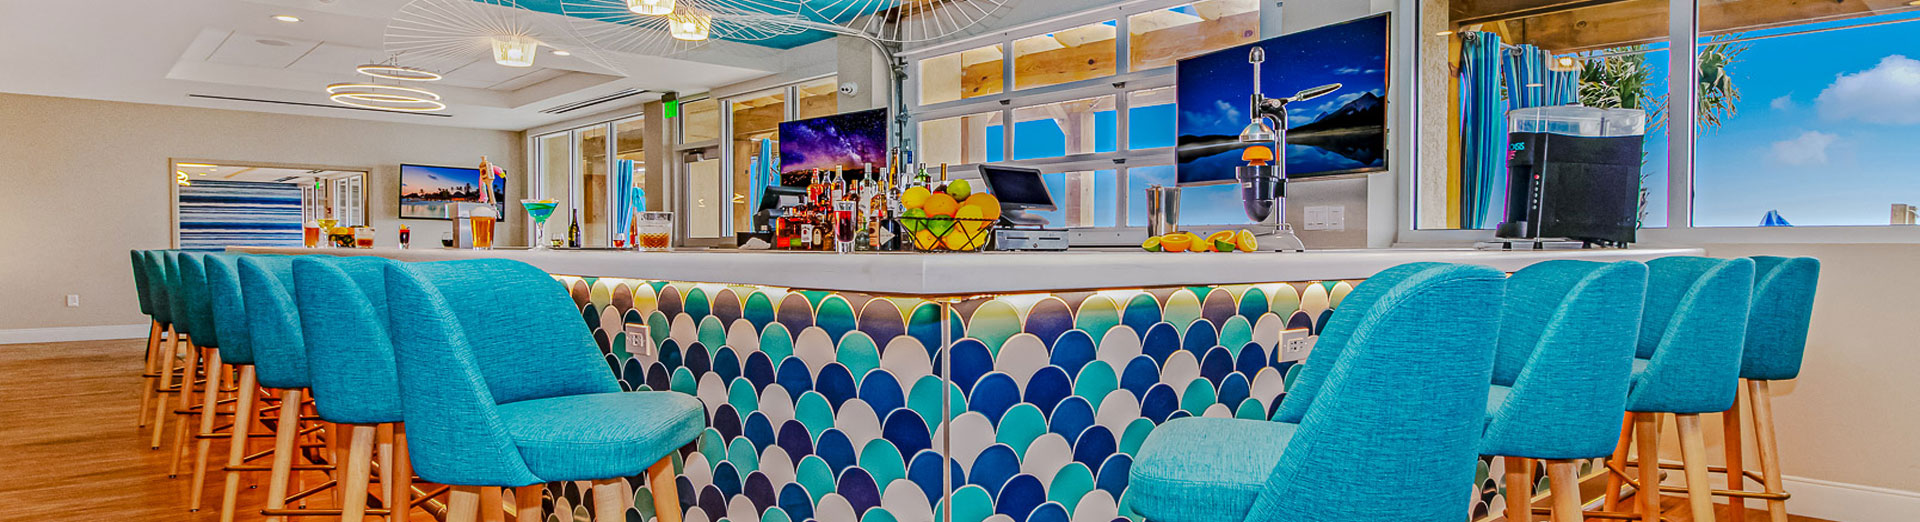 Restaurant & Bar At Holiday Inn Oceanfront At Surfside Beach South Carolina